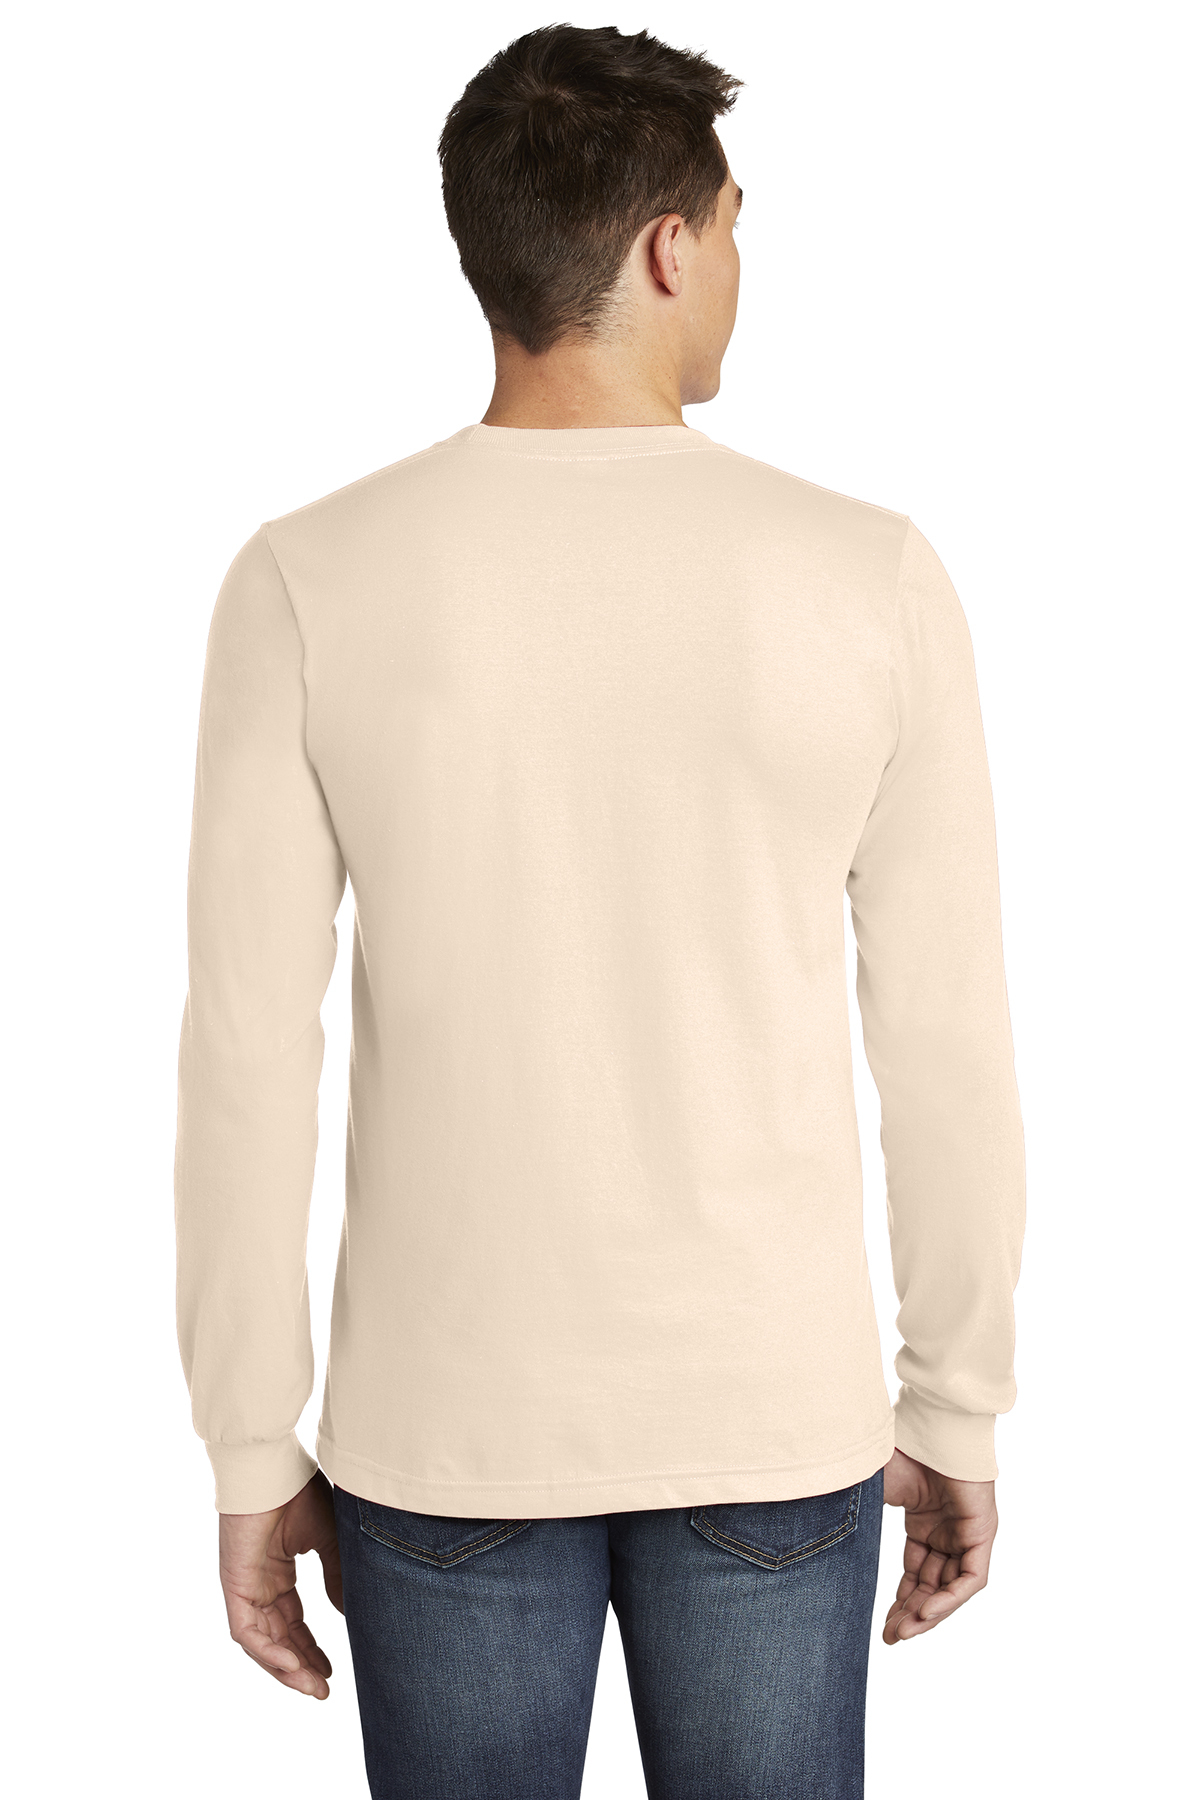 2007 American Apparel Unisex Fine Jersey USA Made Long-Sleeve T-Shirt 